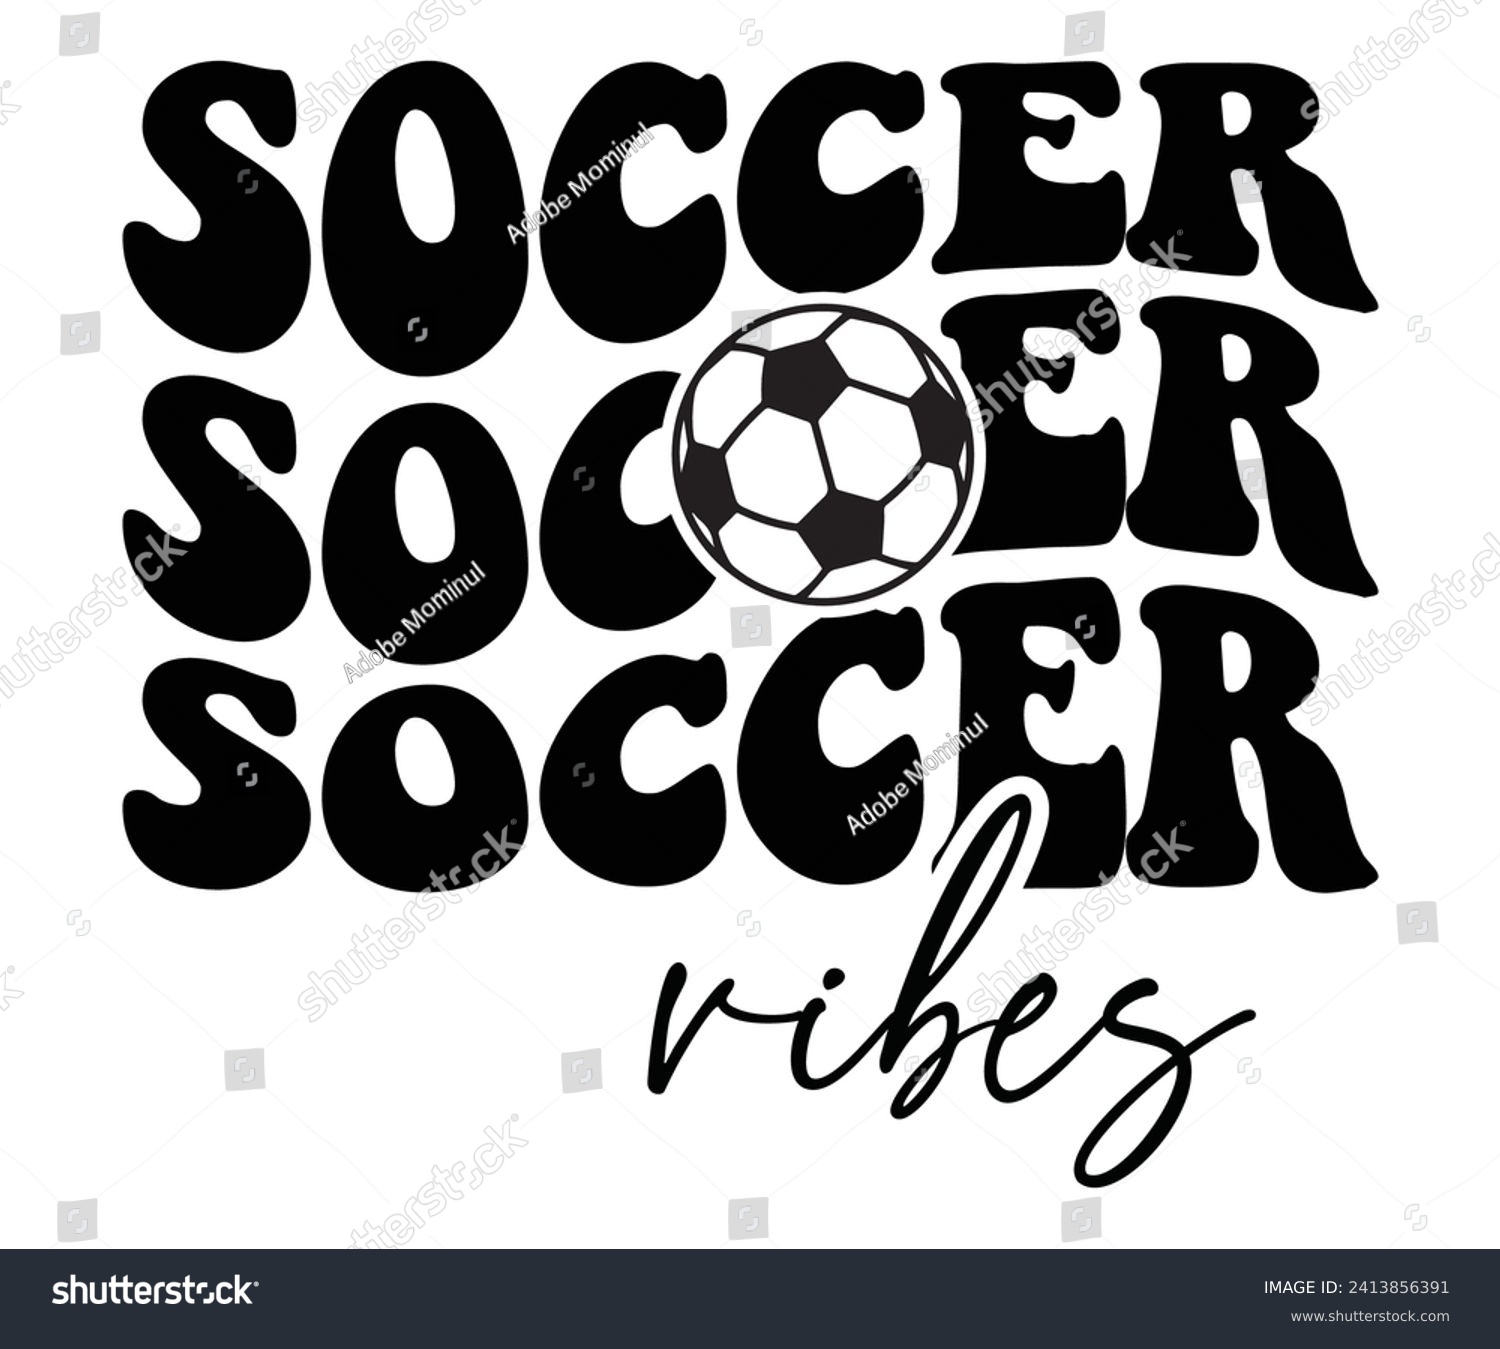 SVG of Soccer Vibes Svg,Soccer Quote Svg,Retro,Soccer Mom Shirt,Funny Shirt,Soccar Player Shirt,Game Day Shirt,Gift For Soccer,Dad of Soccer,Soccer Mascot,Soccer Football,Sport Design Svg,Groovy Cut File, svg